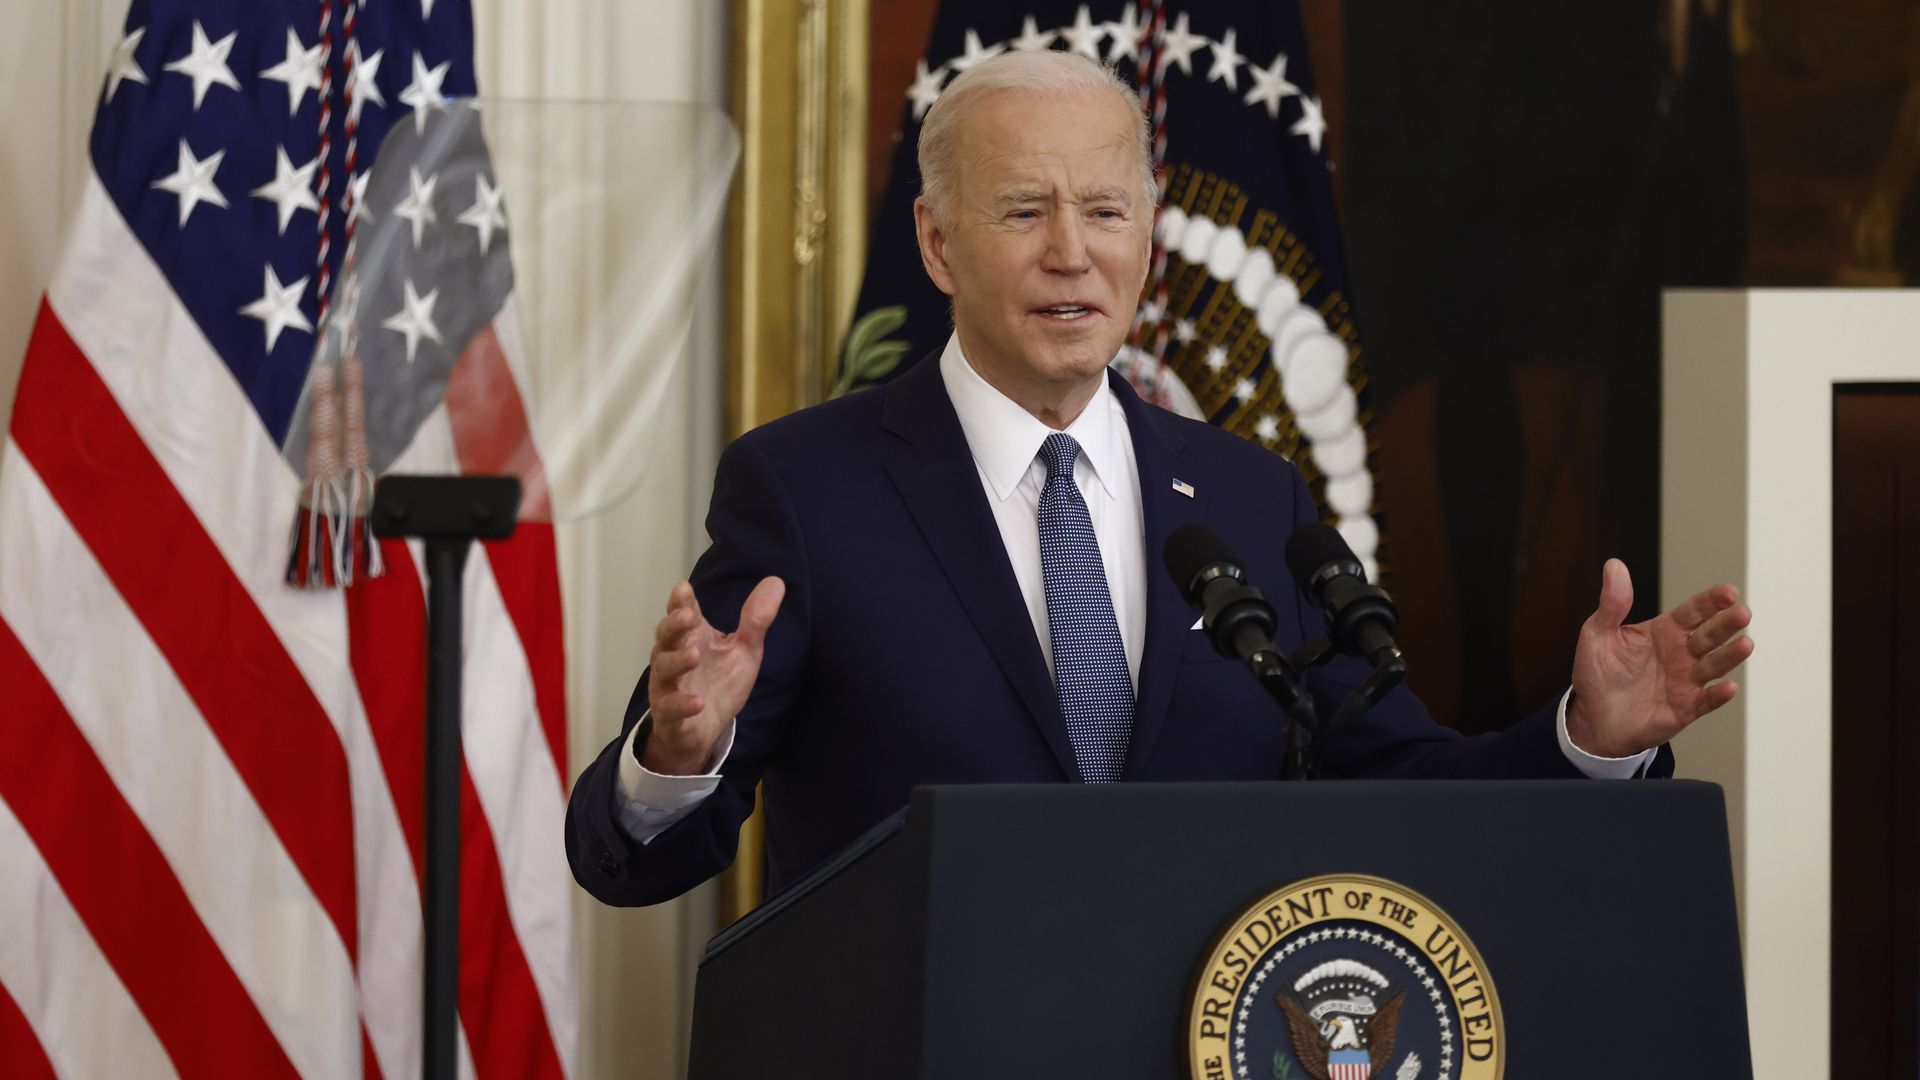 President Biden is seen speaking on Monday.